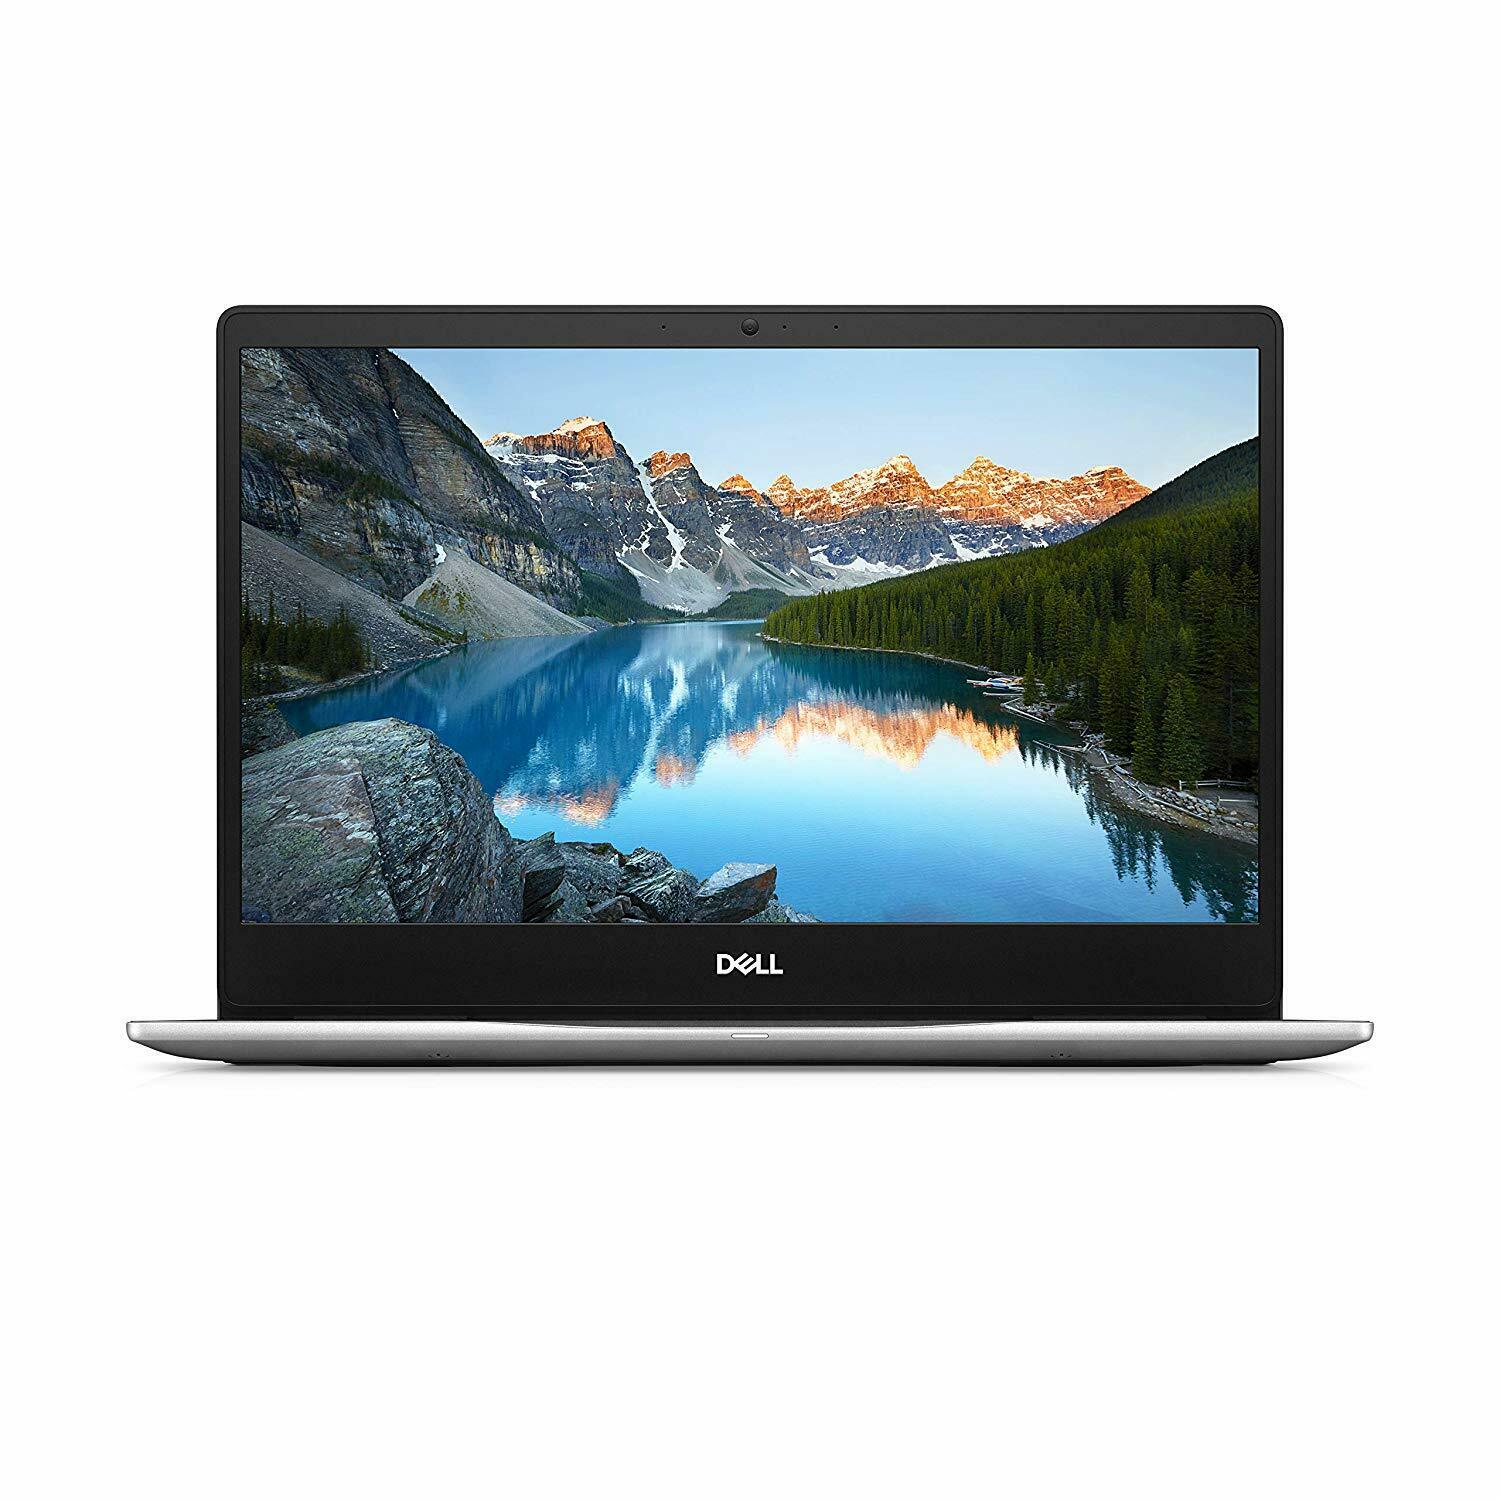 Dell Inspiron 13 7380 Laptop, Intel Core i7, 16GB RAM, 512GB SSD, 13.3” Full HD, Silver - New